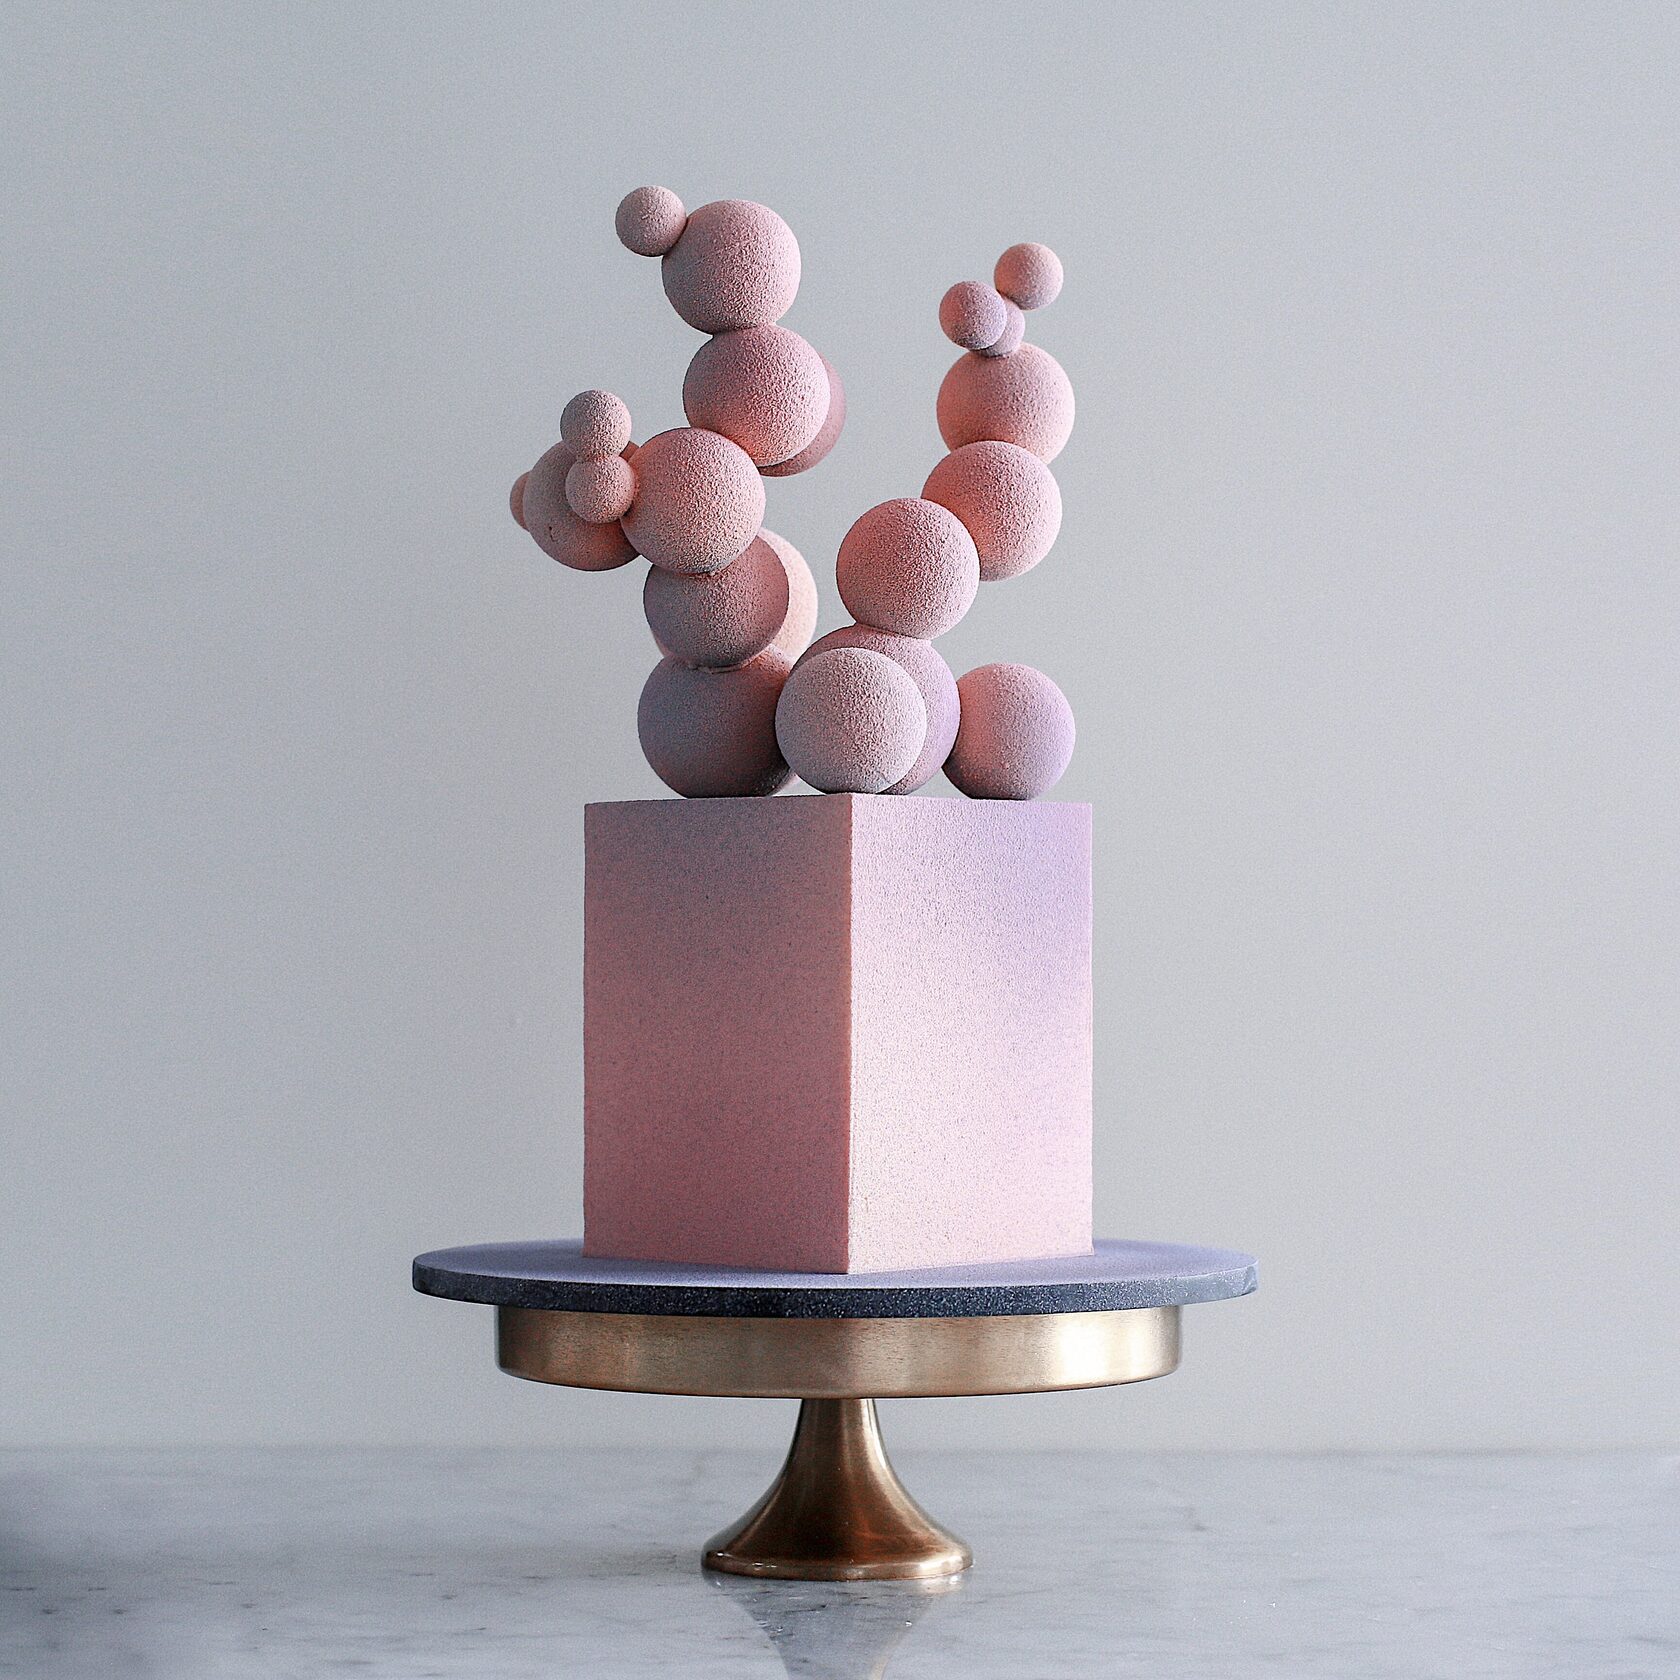 Chocolate molecule - Decorated Cake by Alejandro - CakesDecor